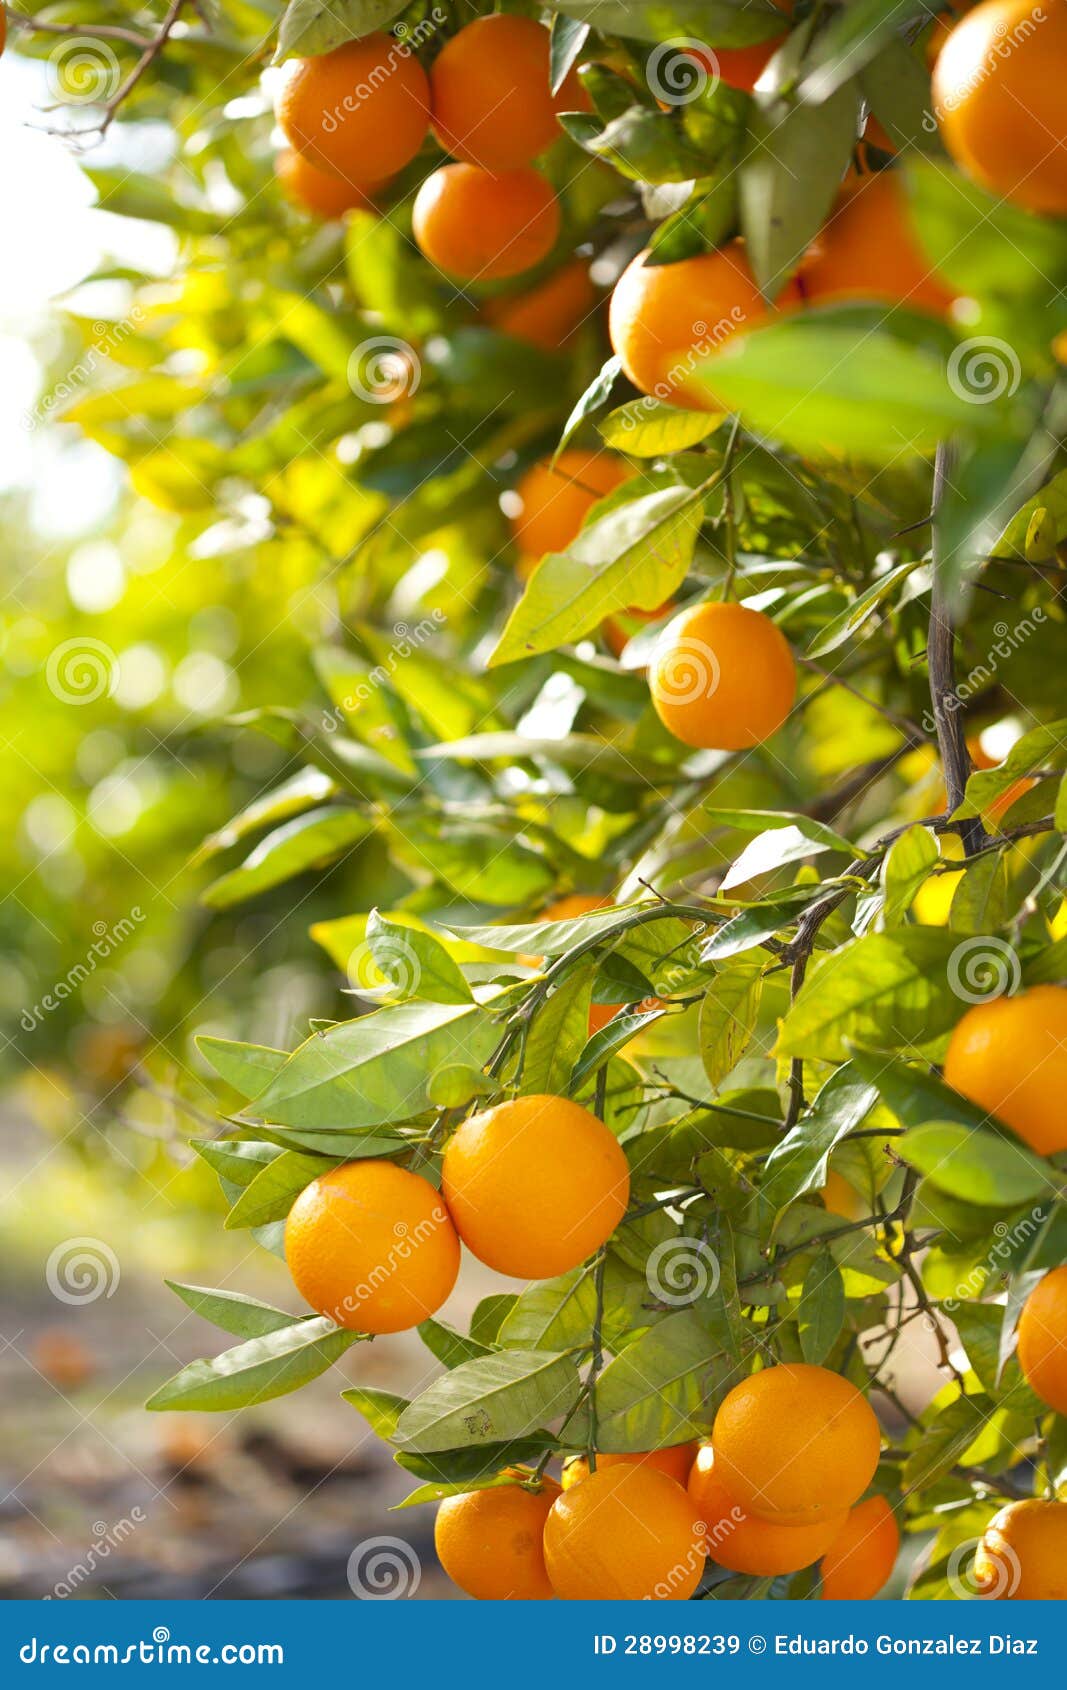 valencia orange trees